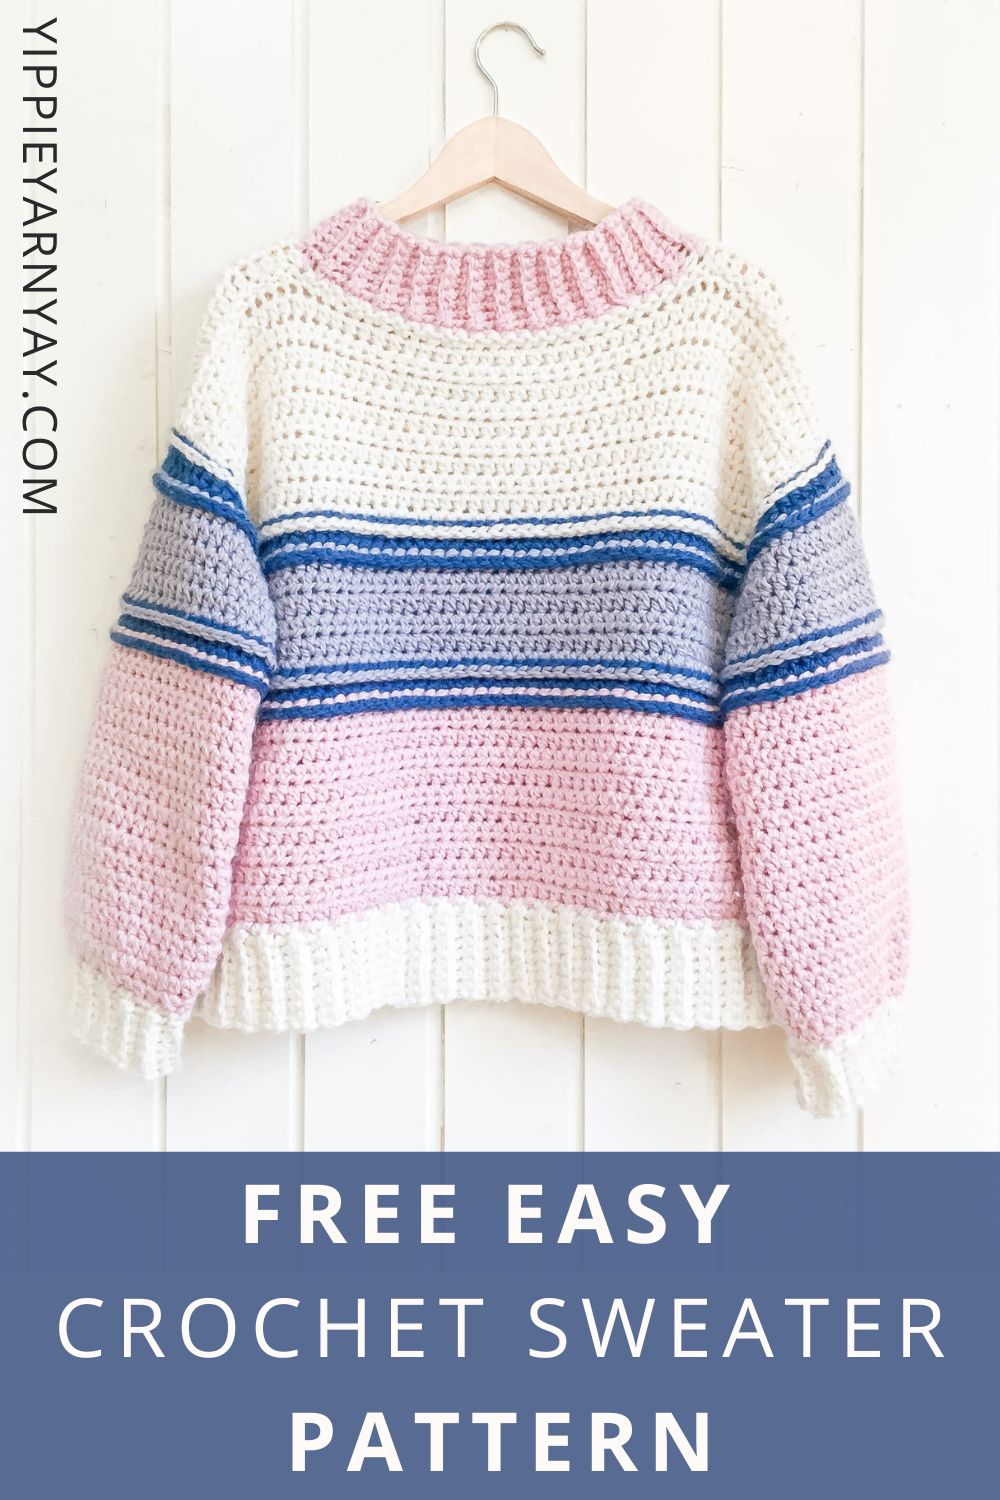 The Monday Sweater Pinterest